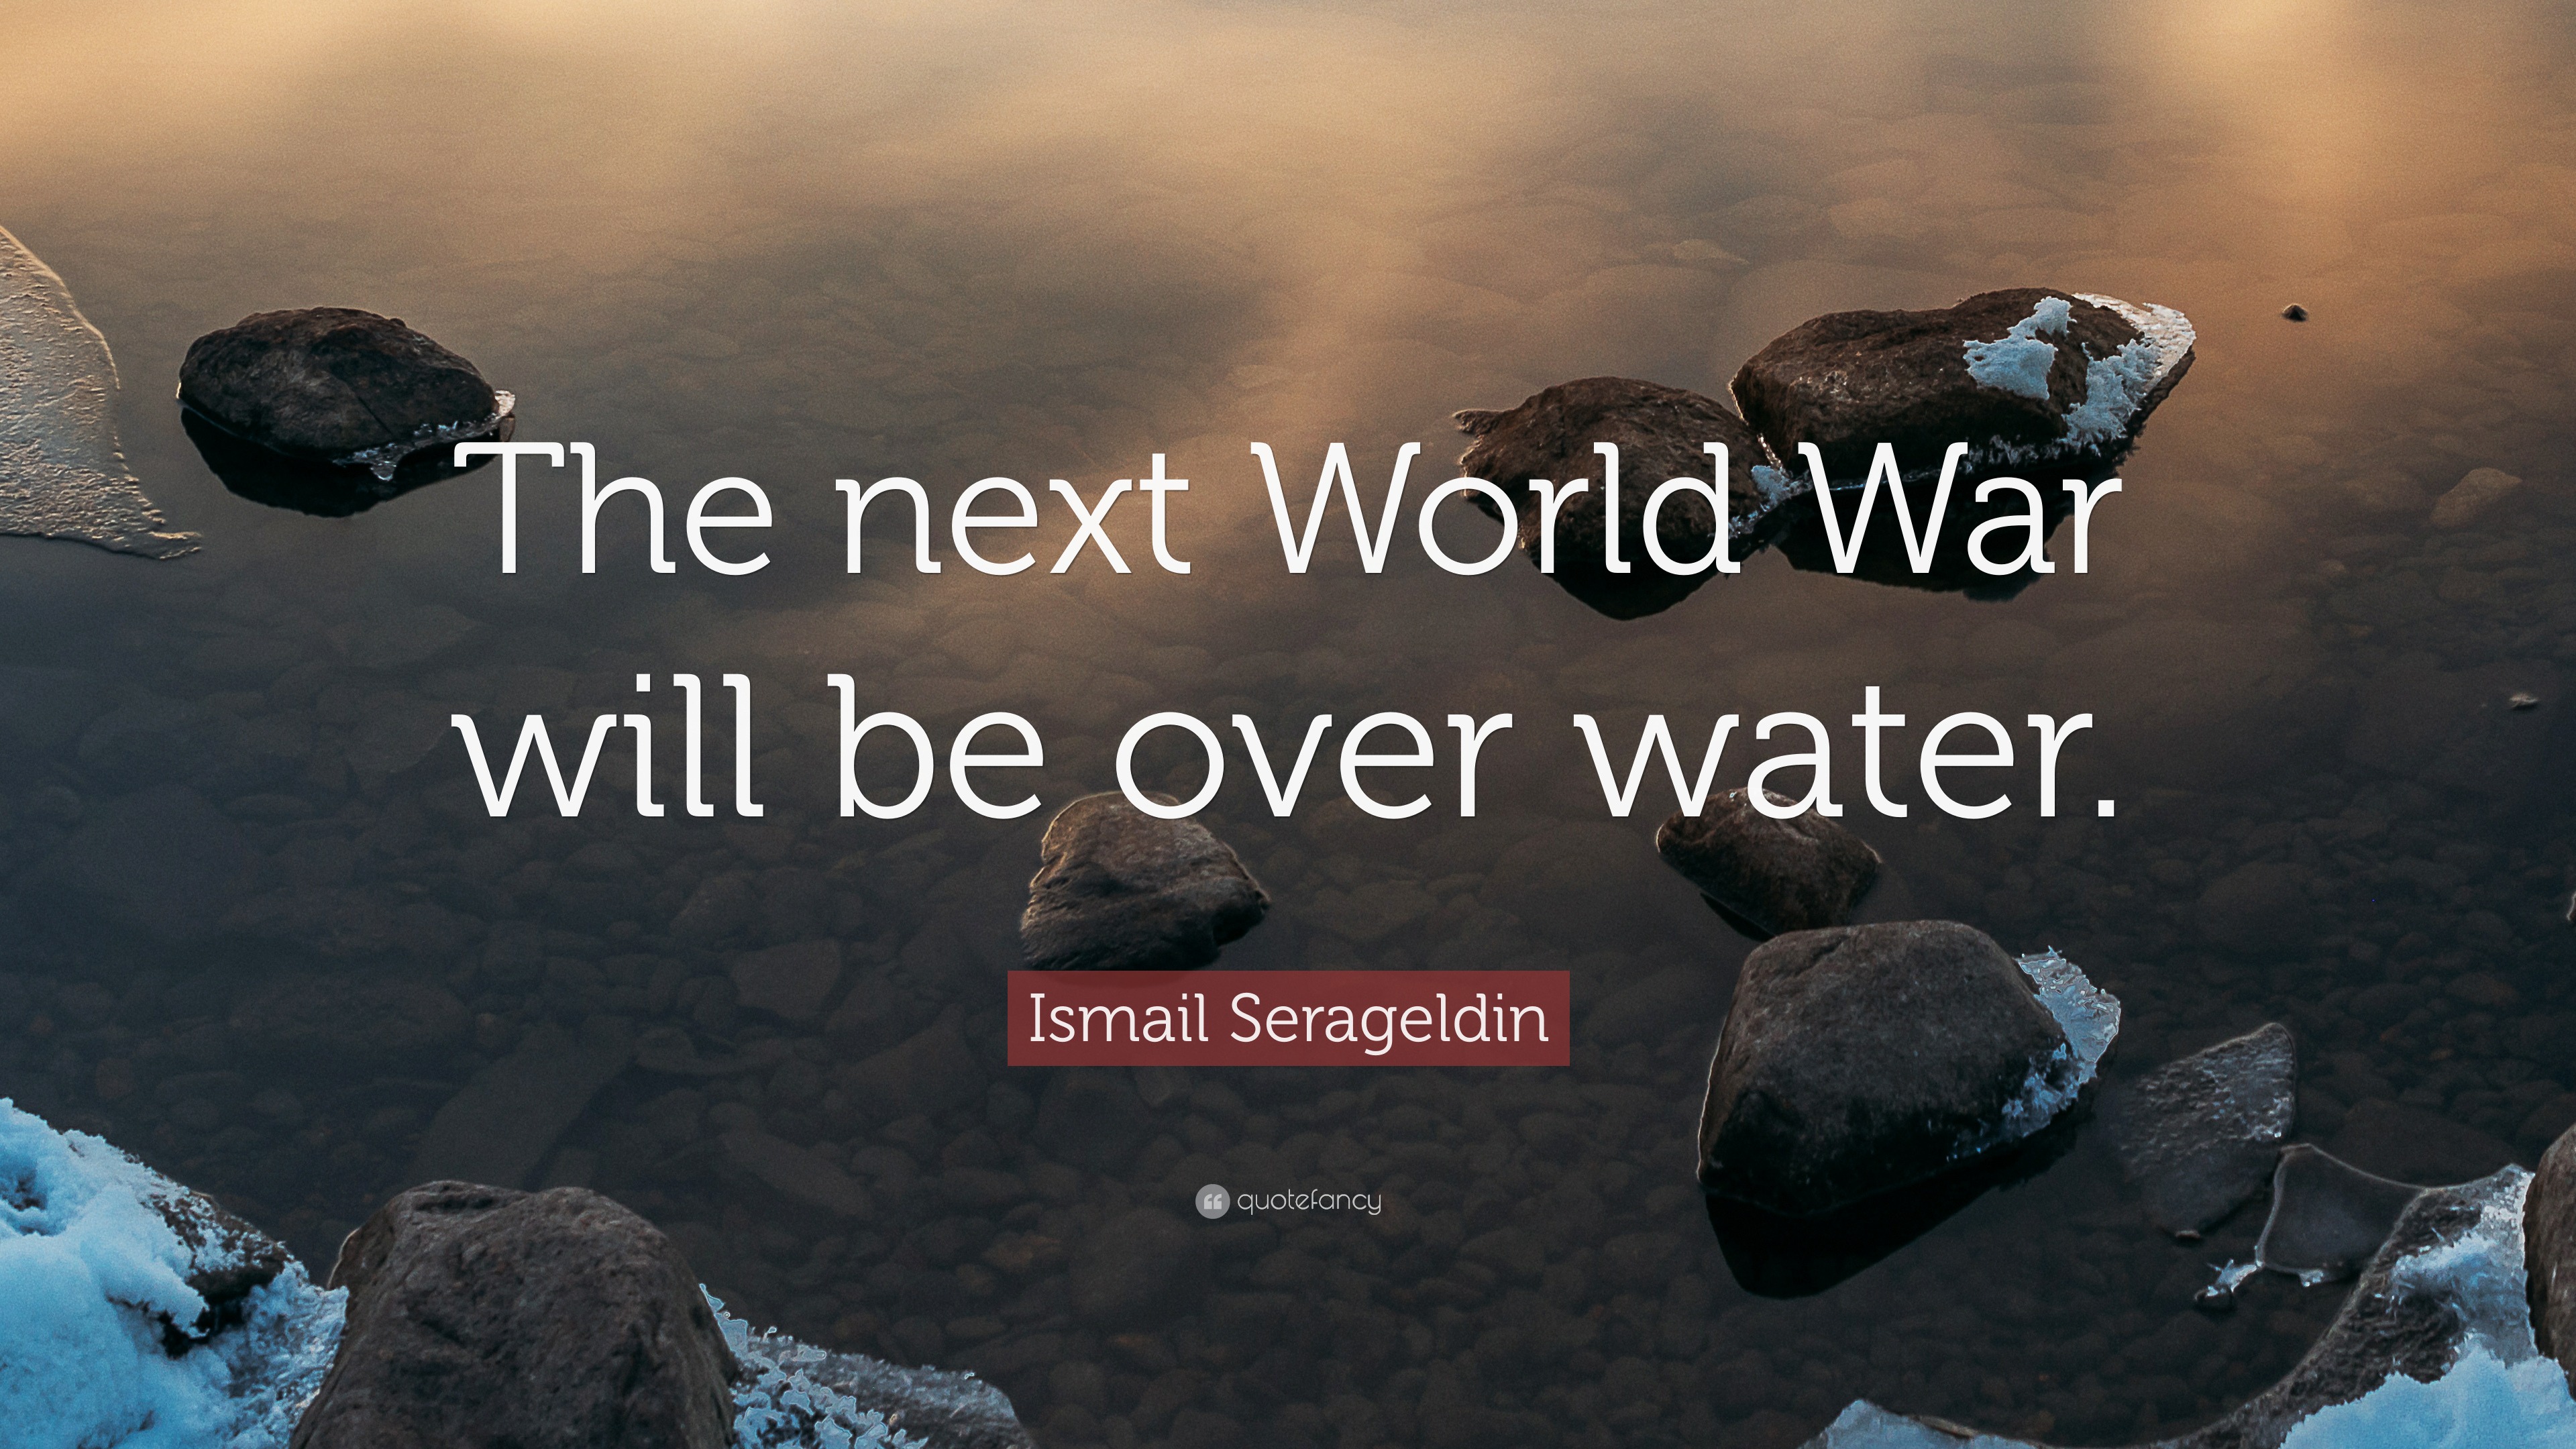 Ismail Serageldin Quote: “The next World War will be over water.”